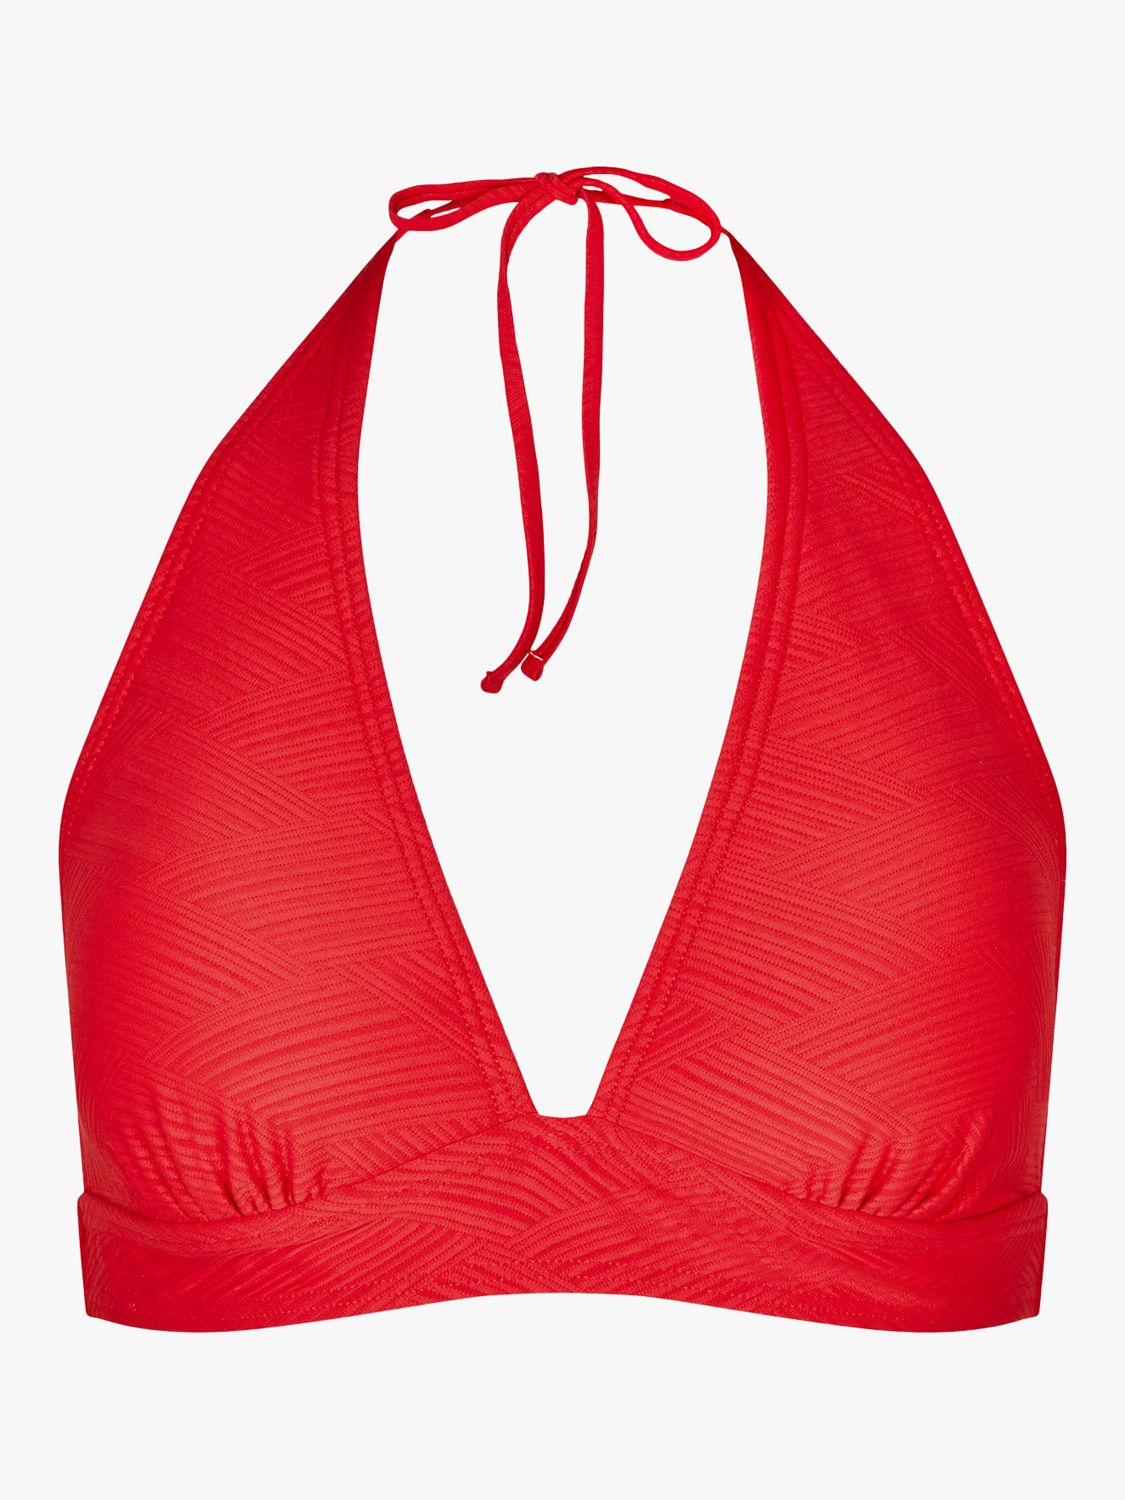 Accessorize Textured Triangle Bikini Top, Red, 6